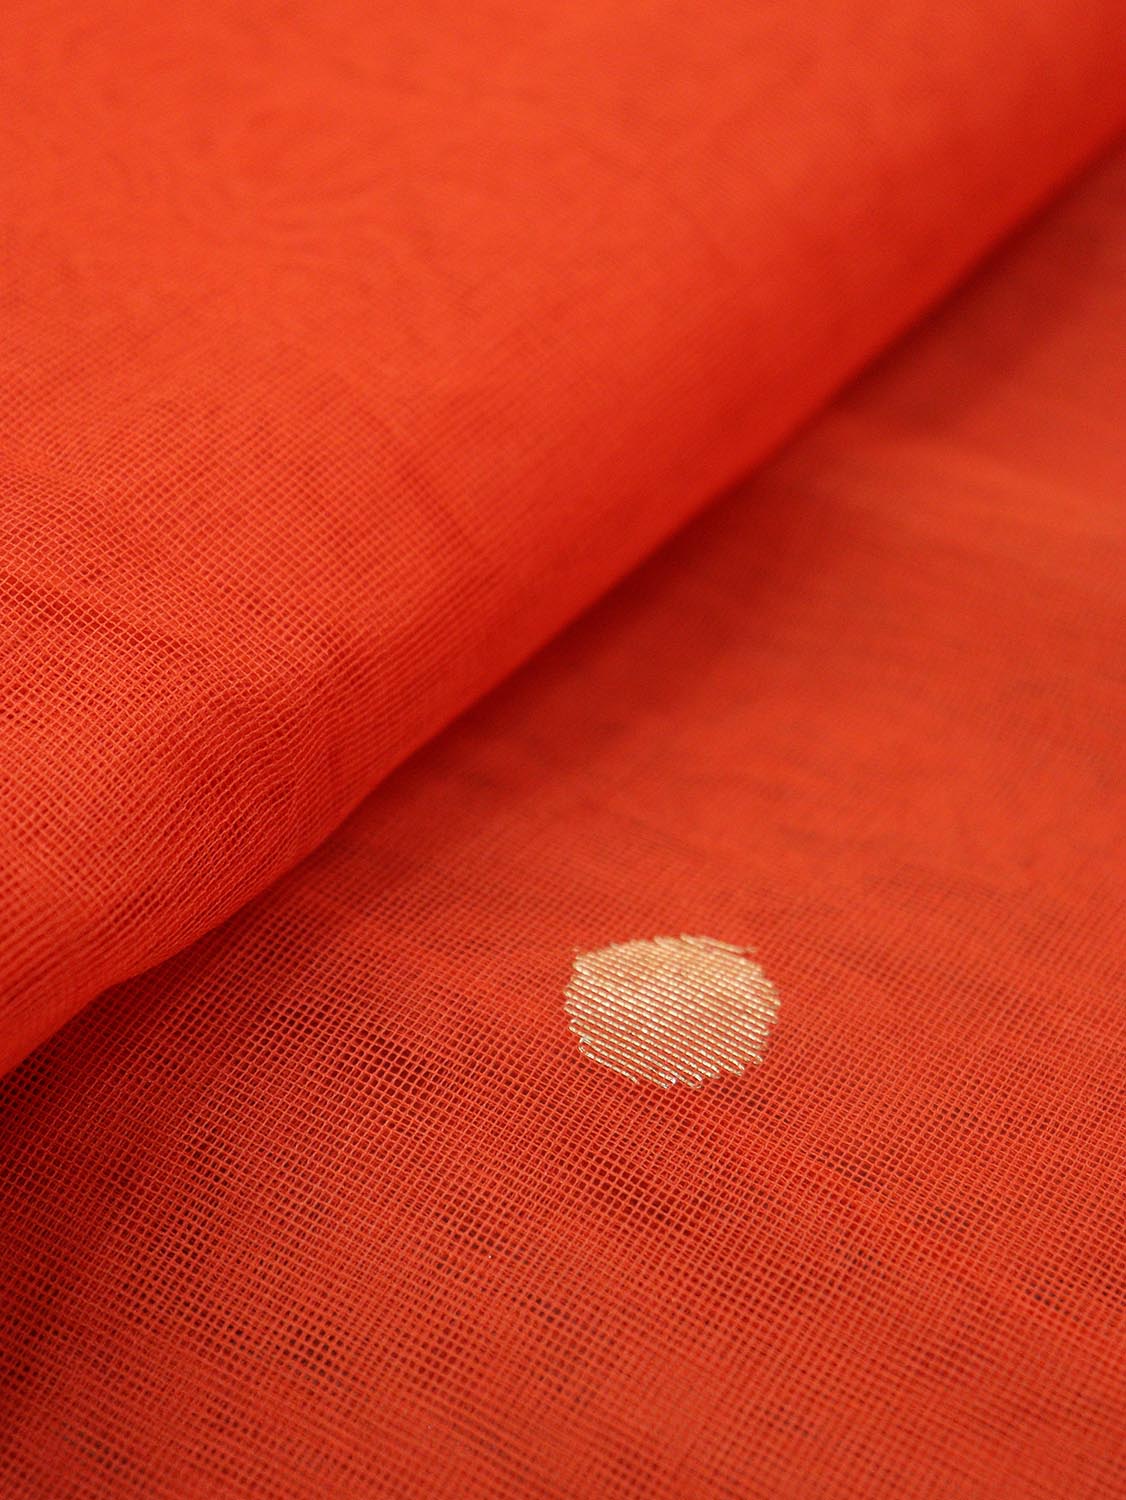 Stunning Orange Banarasi Net Fabric with Intricate Booti Design (1 Mtr)